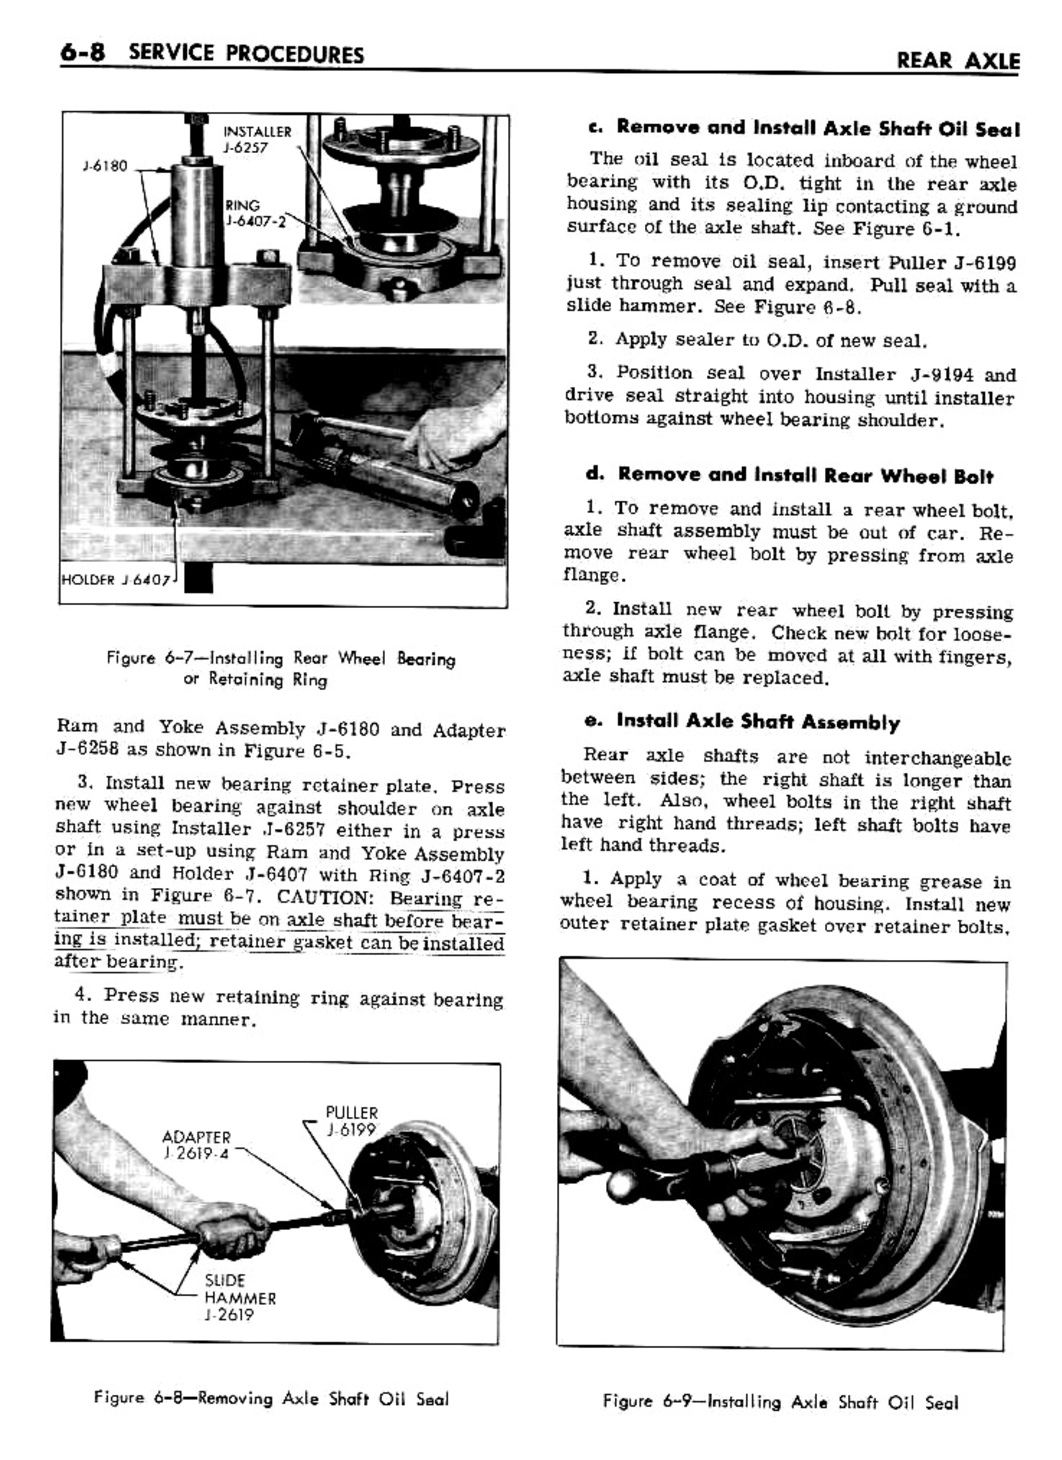 n_06 1961 Buick Shop Manual - Rear Axle-008-008.jpg